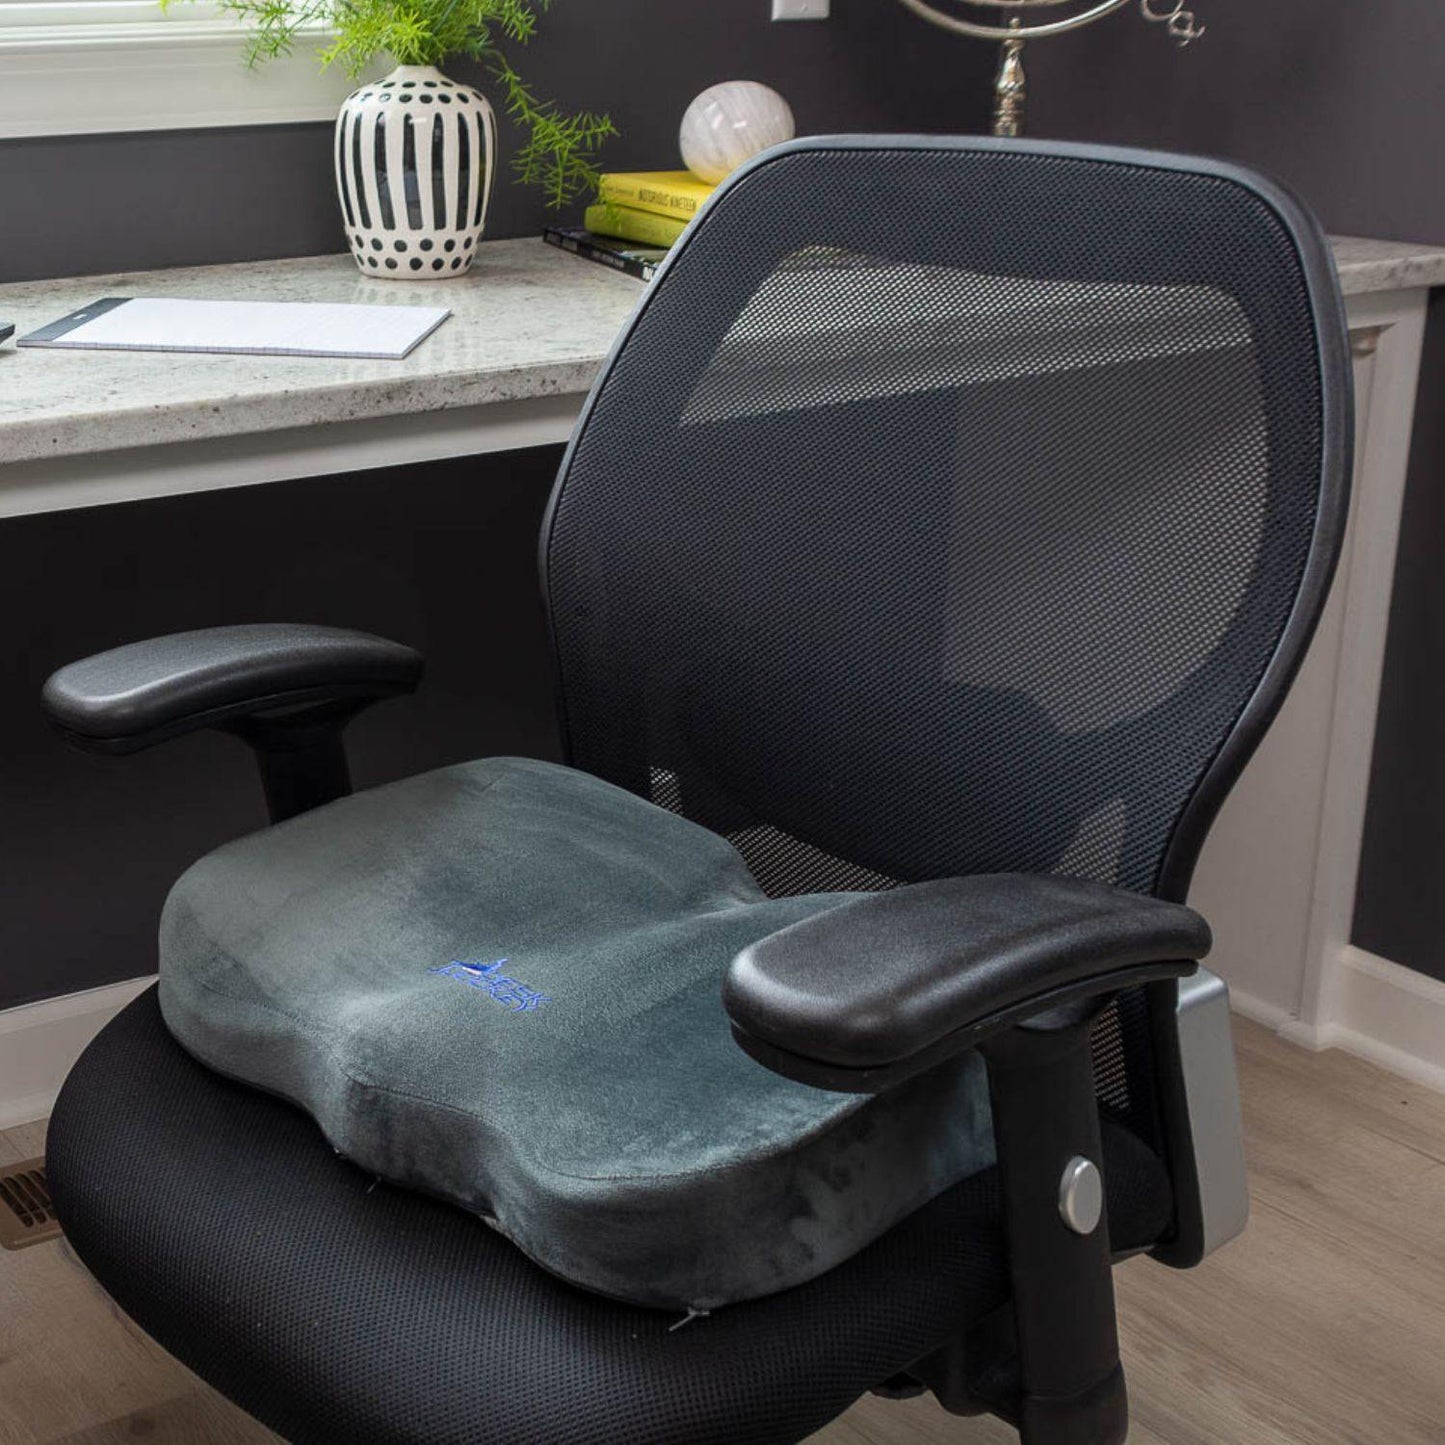 Lumbar Support for Office chair Cushion - Desk Jockey – Desk